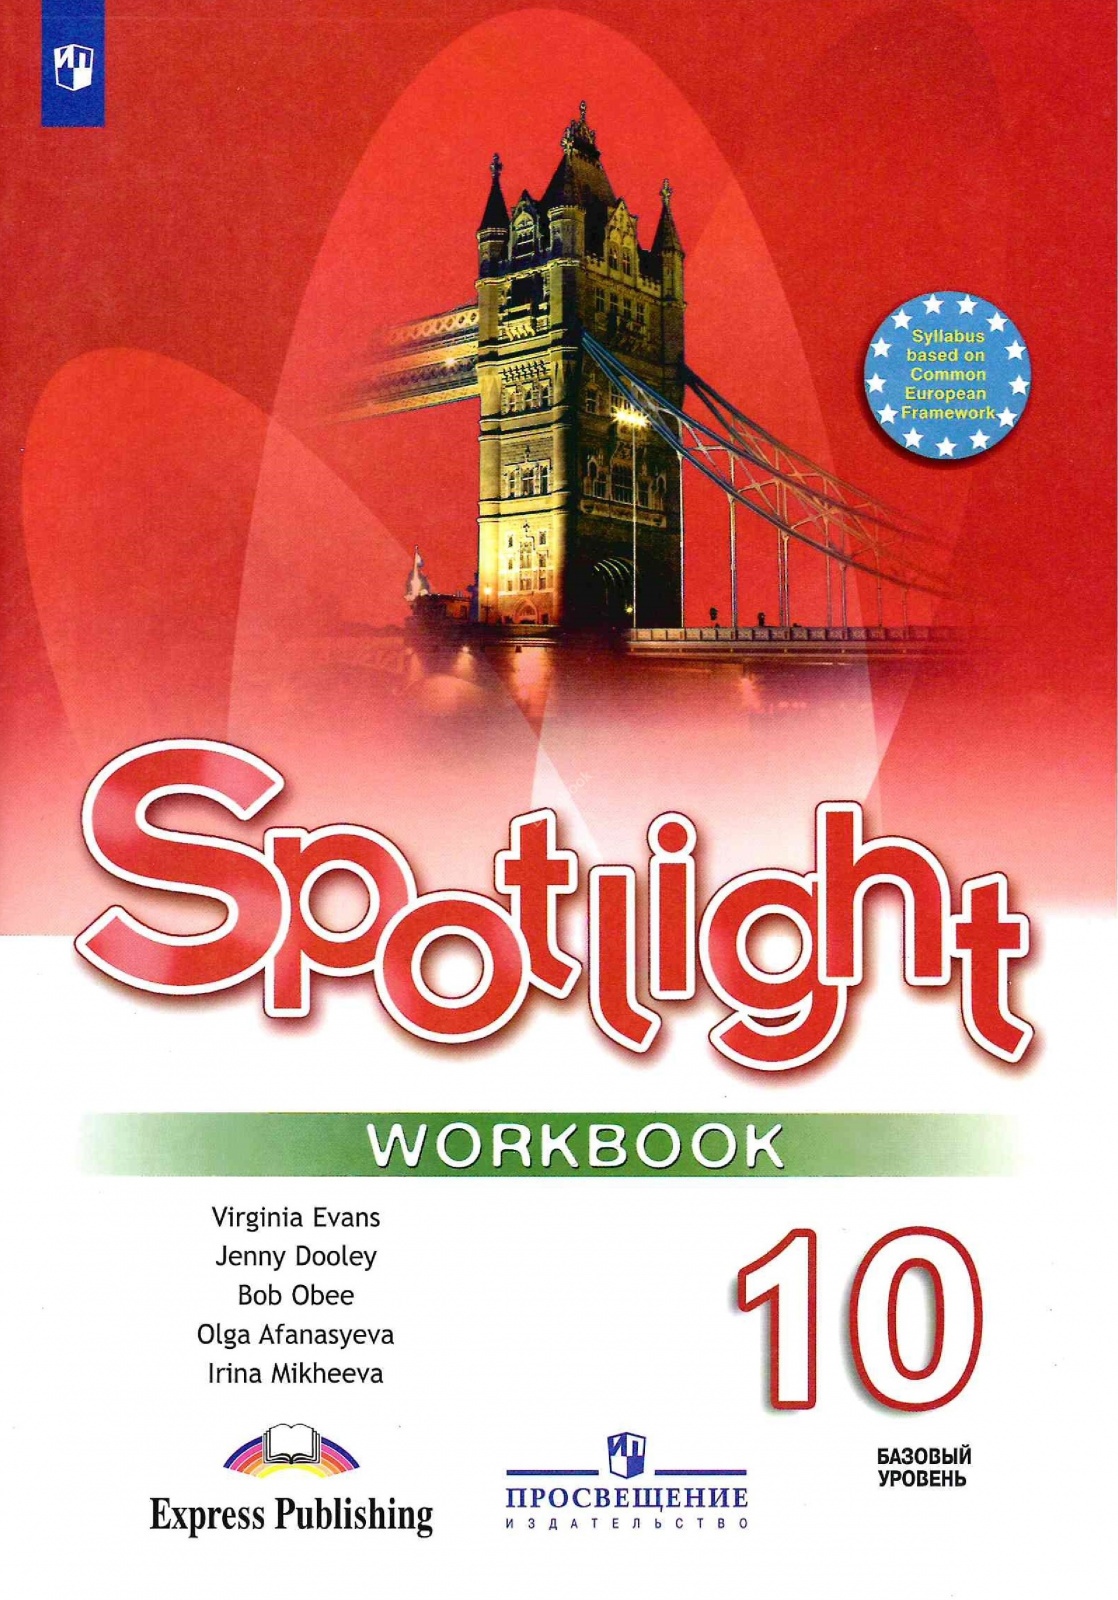 Английский 10 класс видео. Workbook Spotlight 5 класс ваулина. Spotlight 5 Workbook английский язык Эванс. Англ 5 класс рабочая тетрадь Spotlight. Тетради для английского языка 5 класс спотлайт.